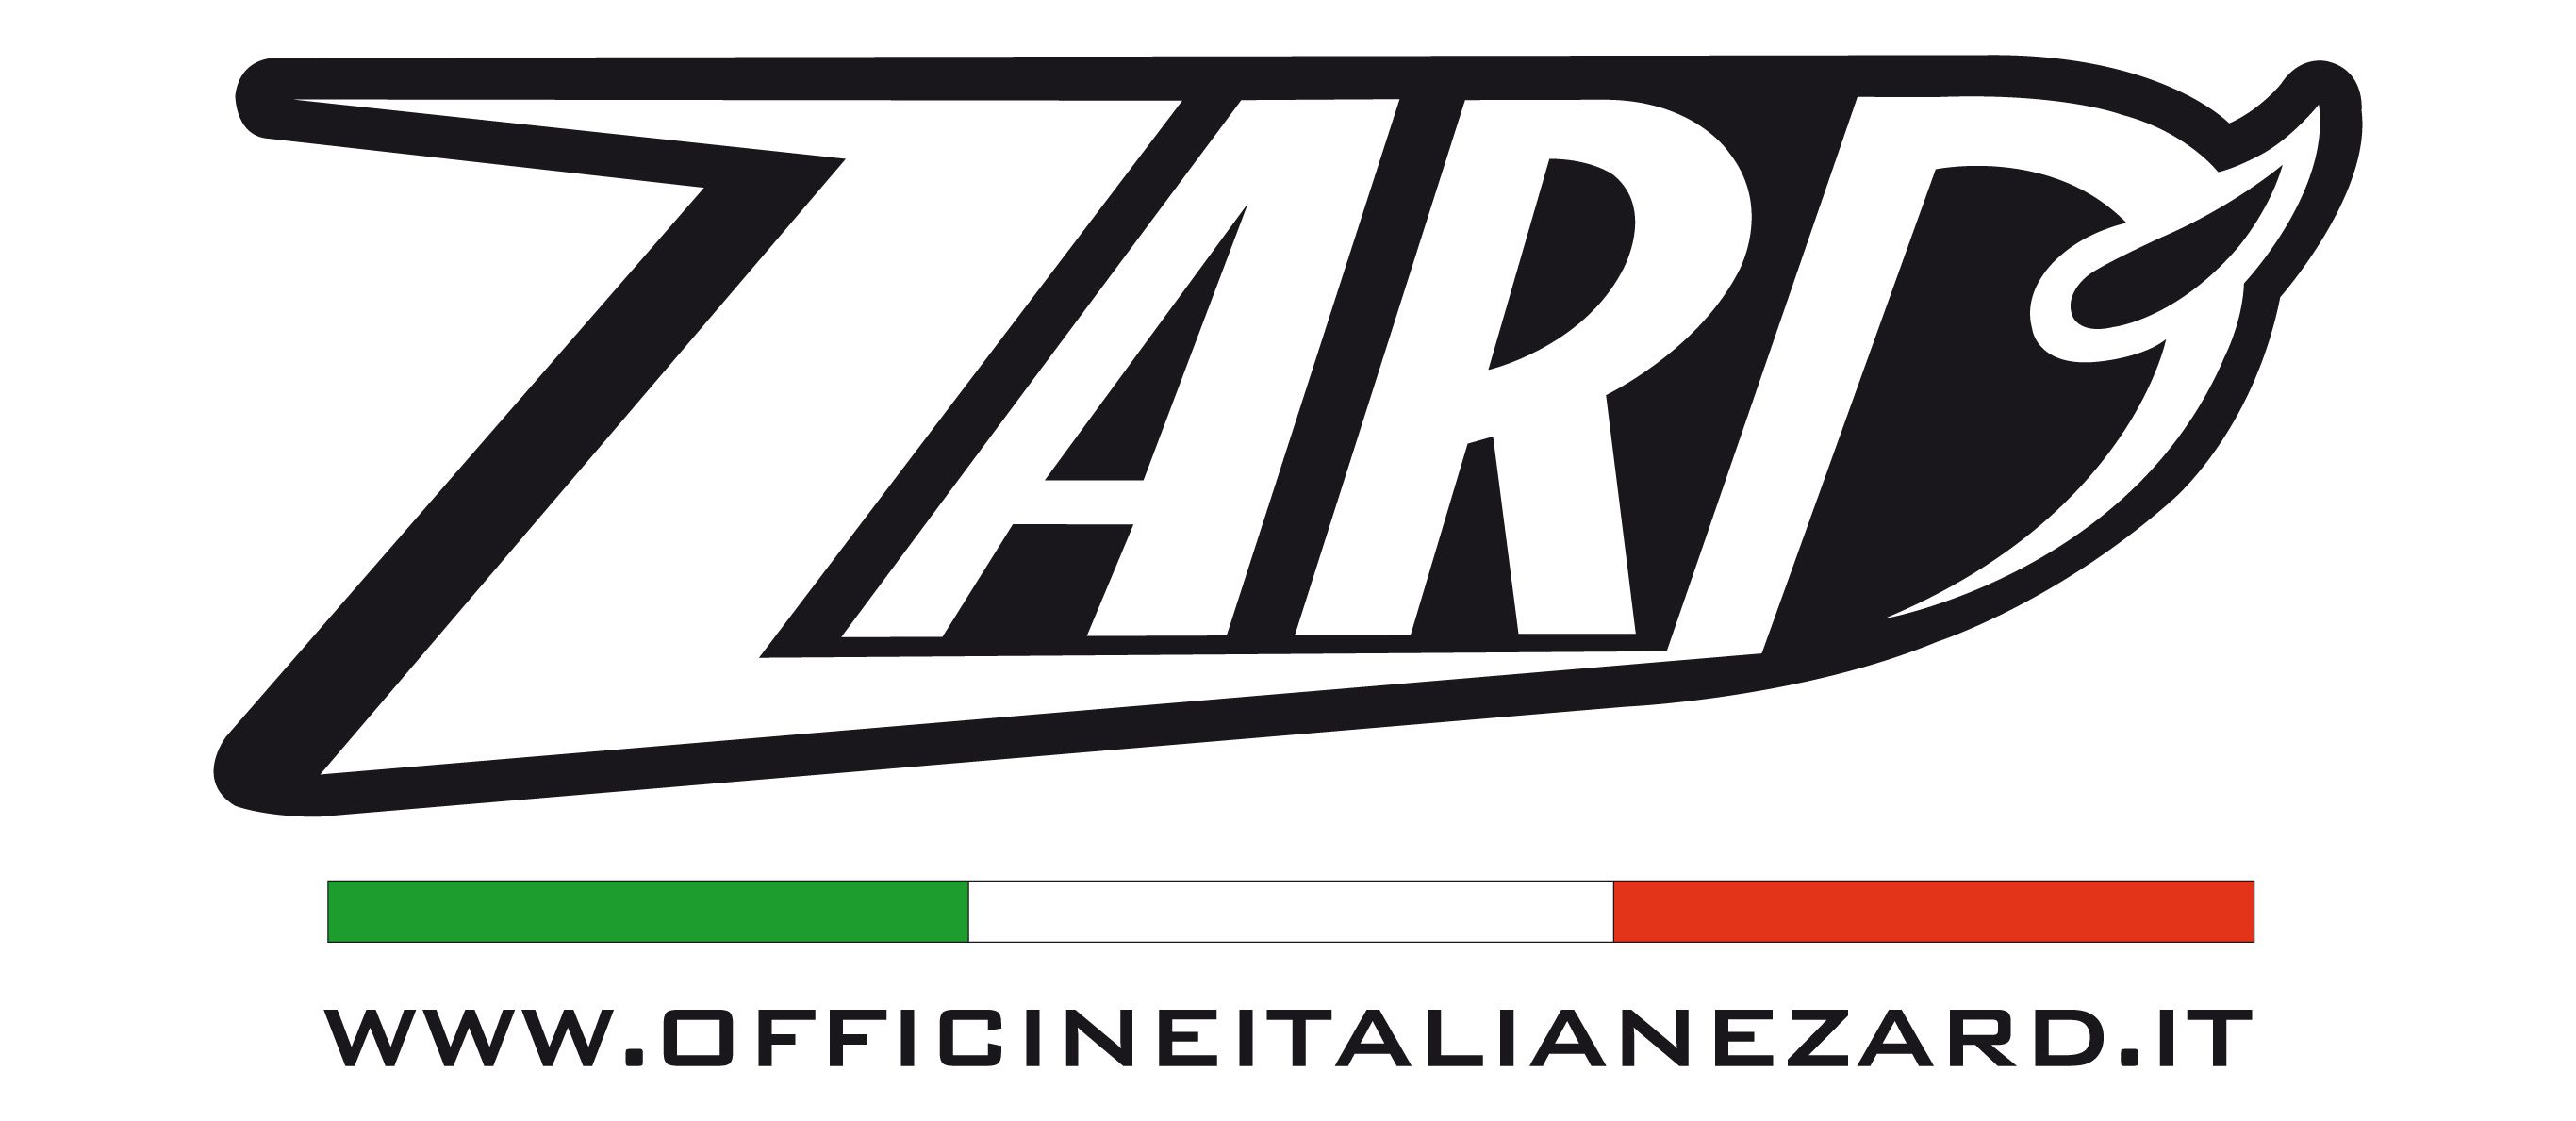 Echappement Zard double sortie Homologué pour Moto Guzzi V7 II Racer  2015-2017